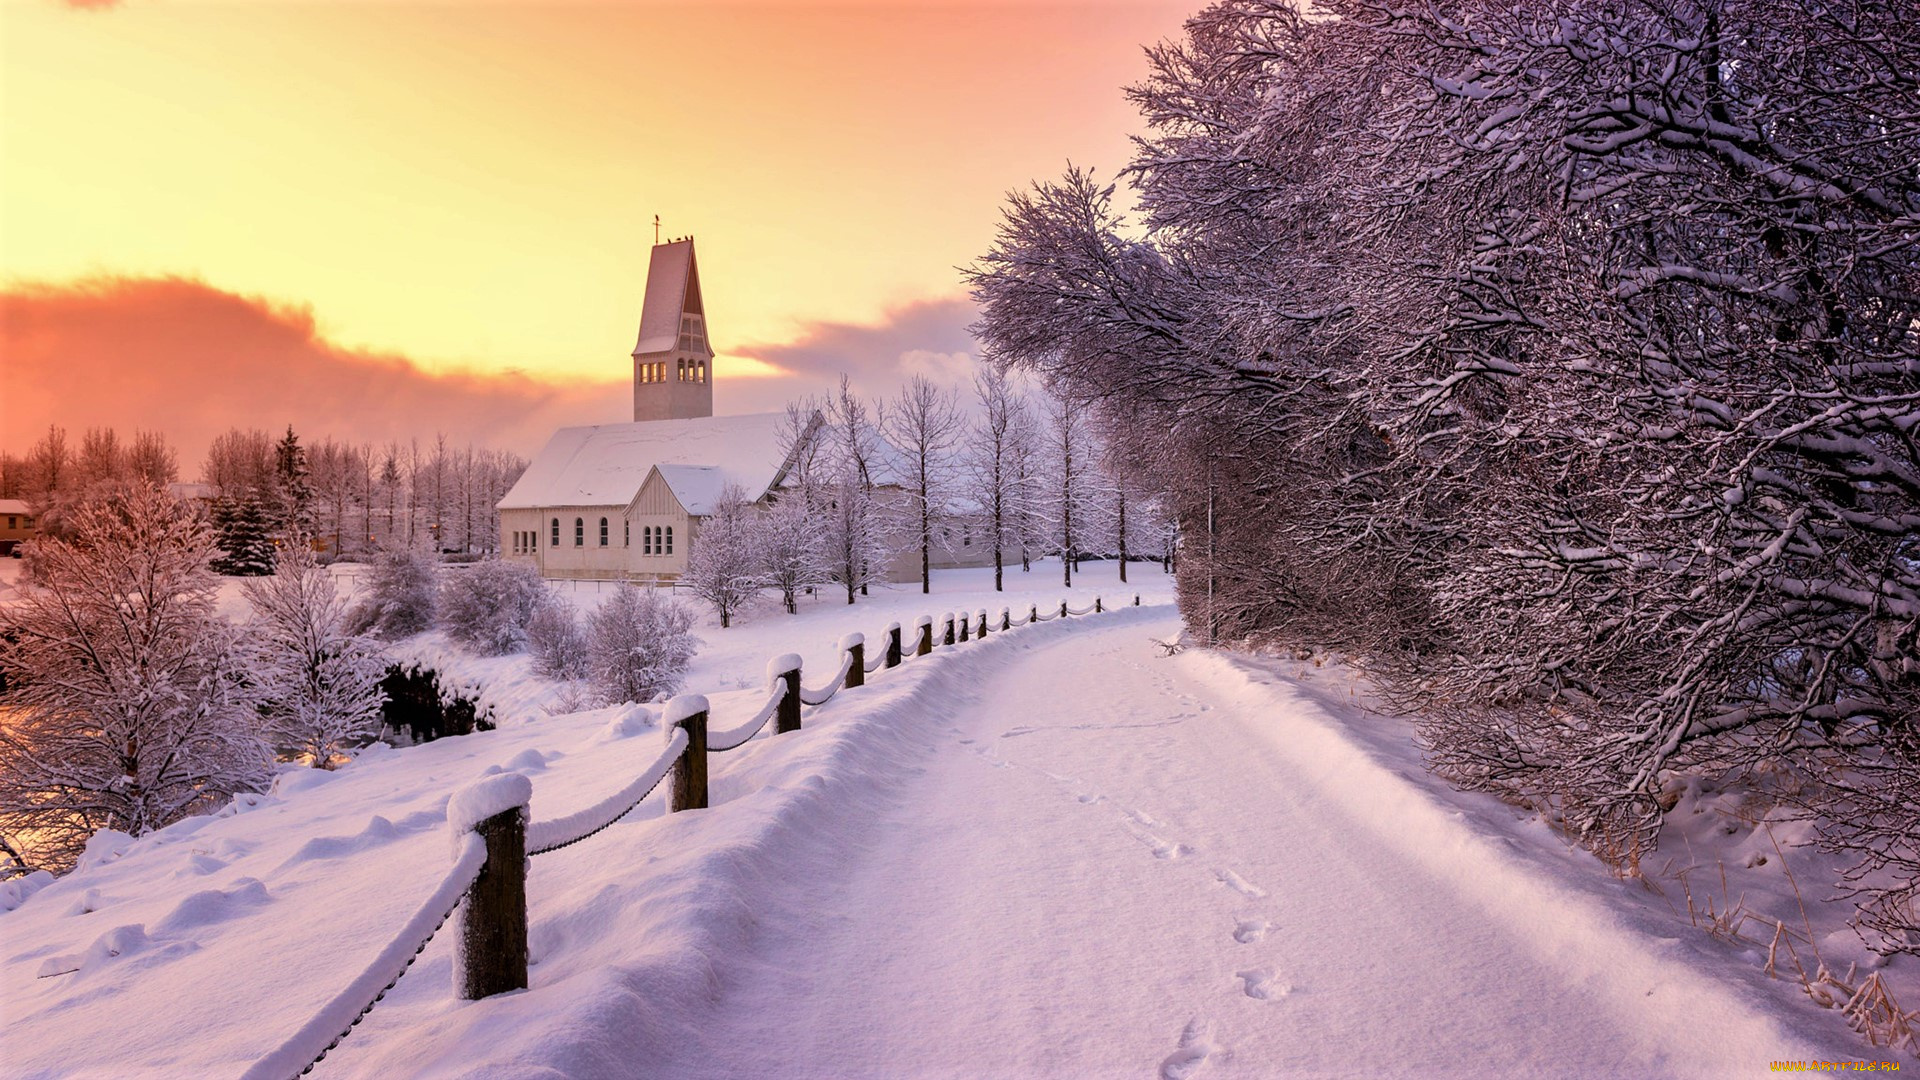 города, -, пейзажи, snow, tree, road, церковь, winter, church, building, зима, снег, дорога